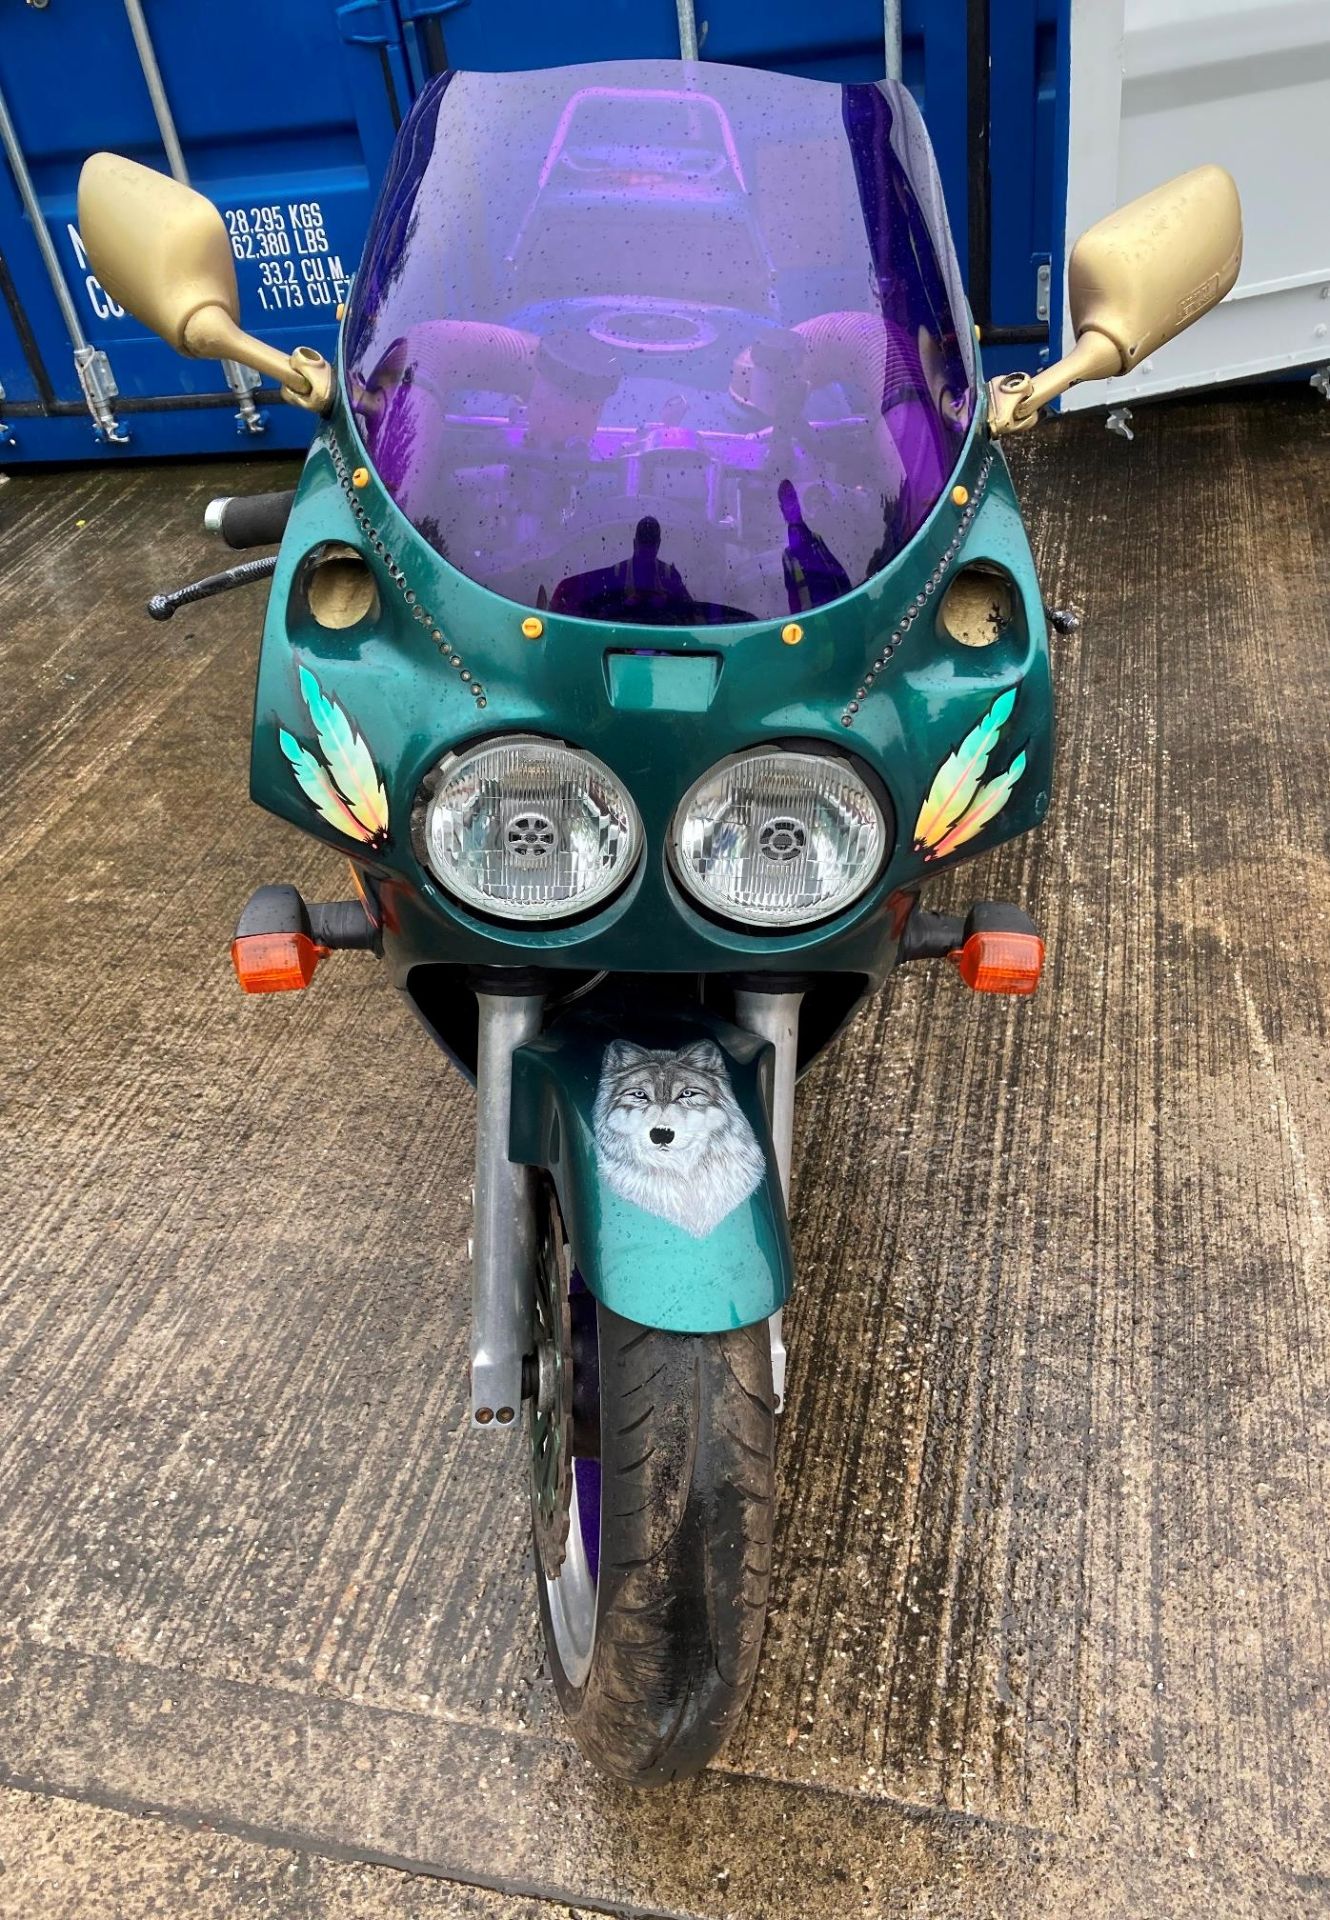 KAWASAKI 750 MOTORCYCLE - Petrol - Green/purple. Sold as a project restoration/spares/repairs. - Image 4 of 4